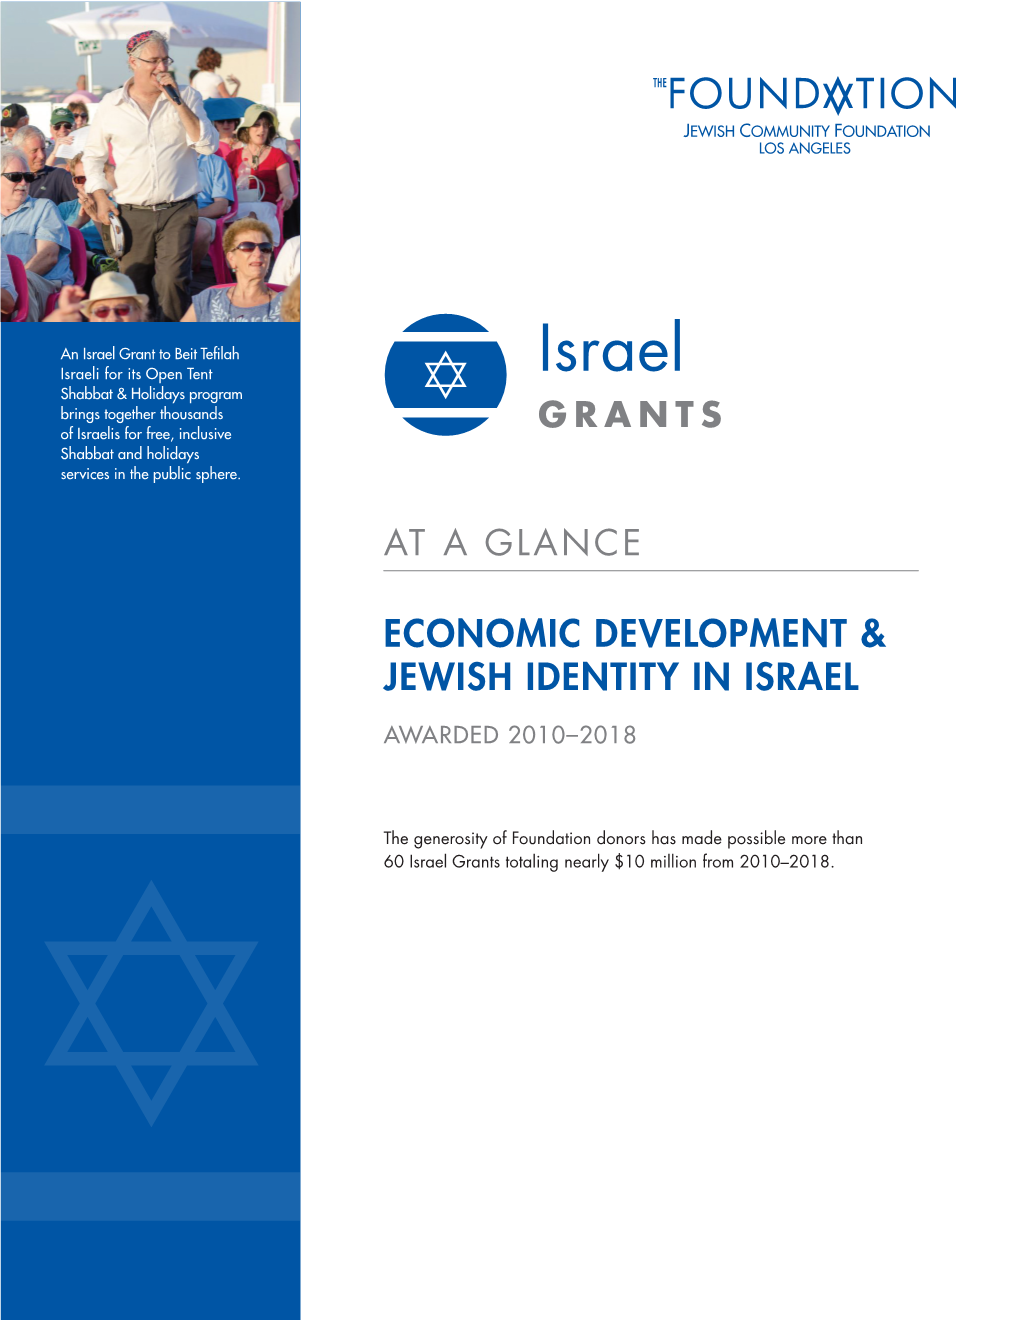 Economic Development & Jewish Identity in Israel